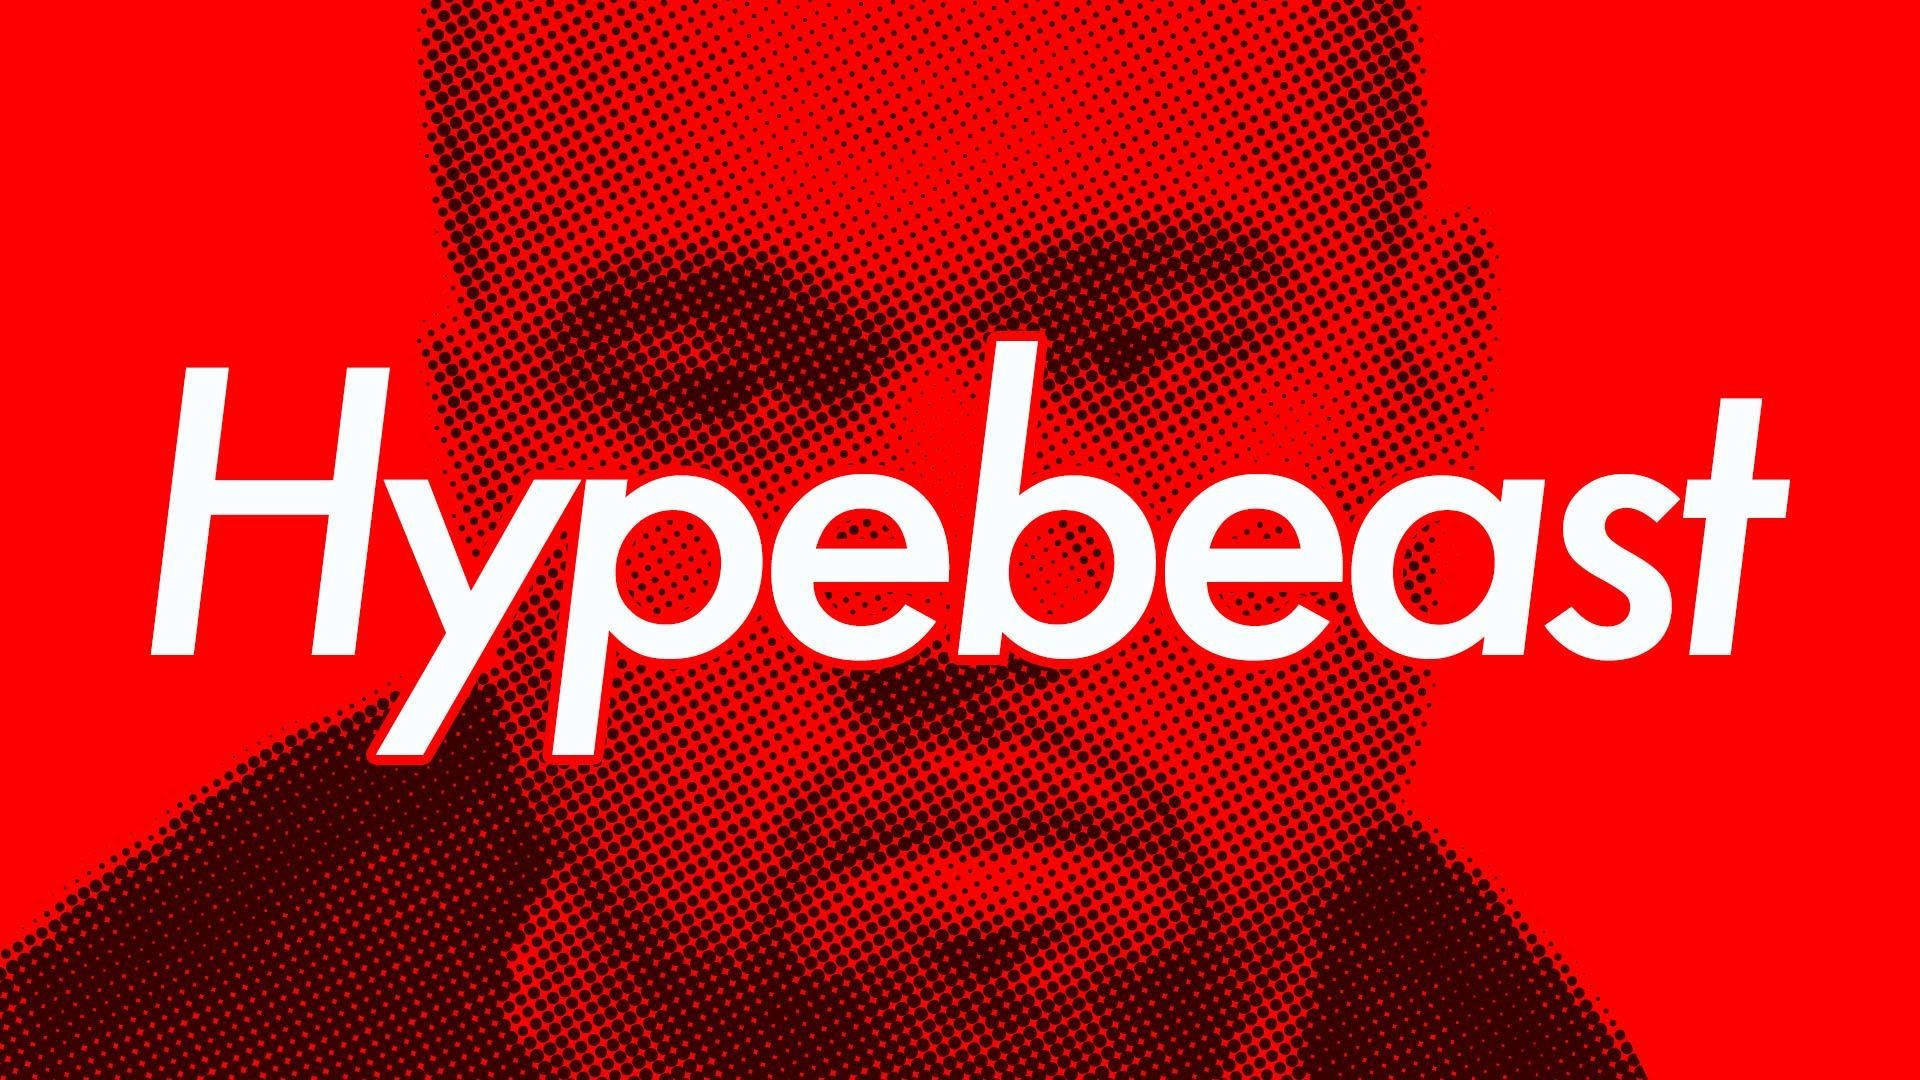 Hd Hypebeast Kanye West Background